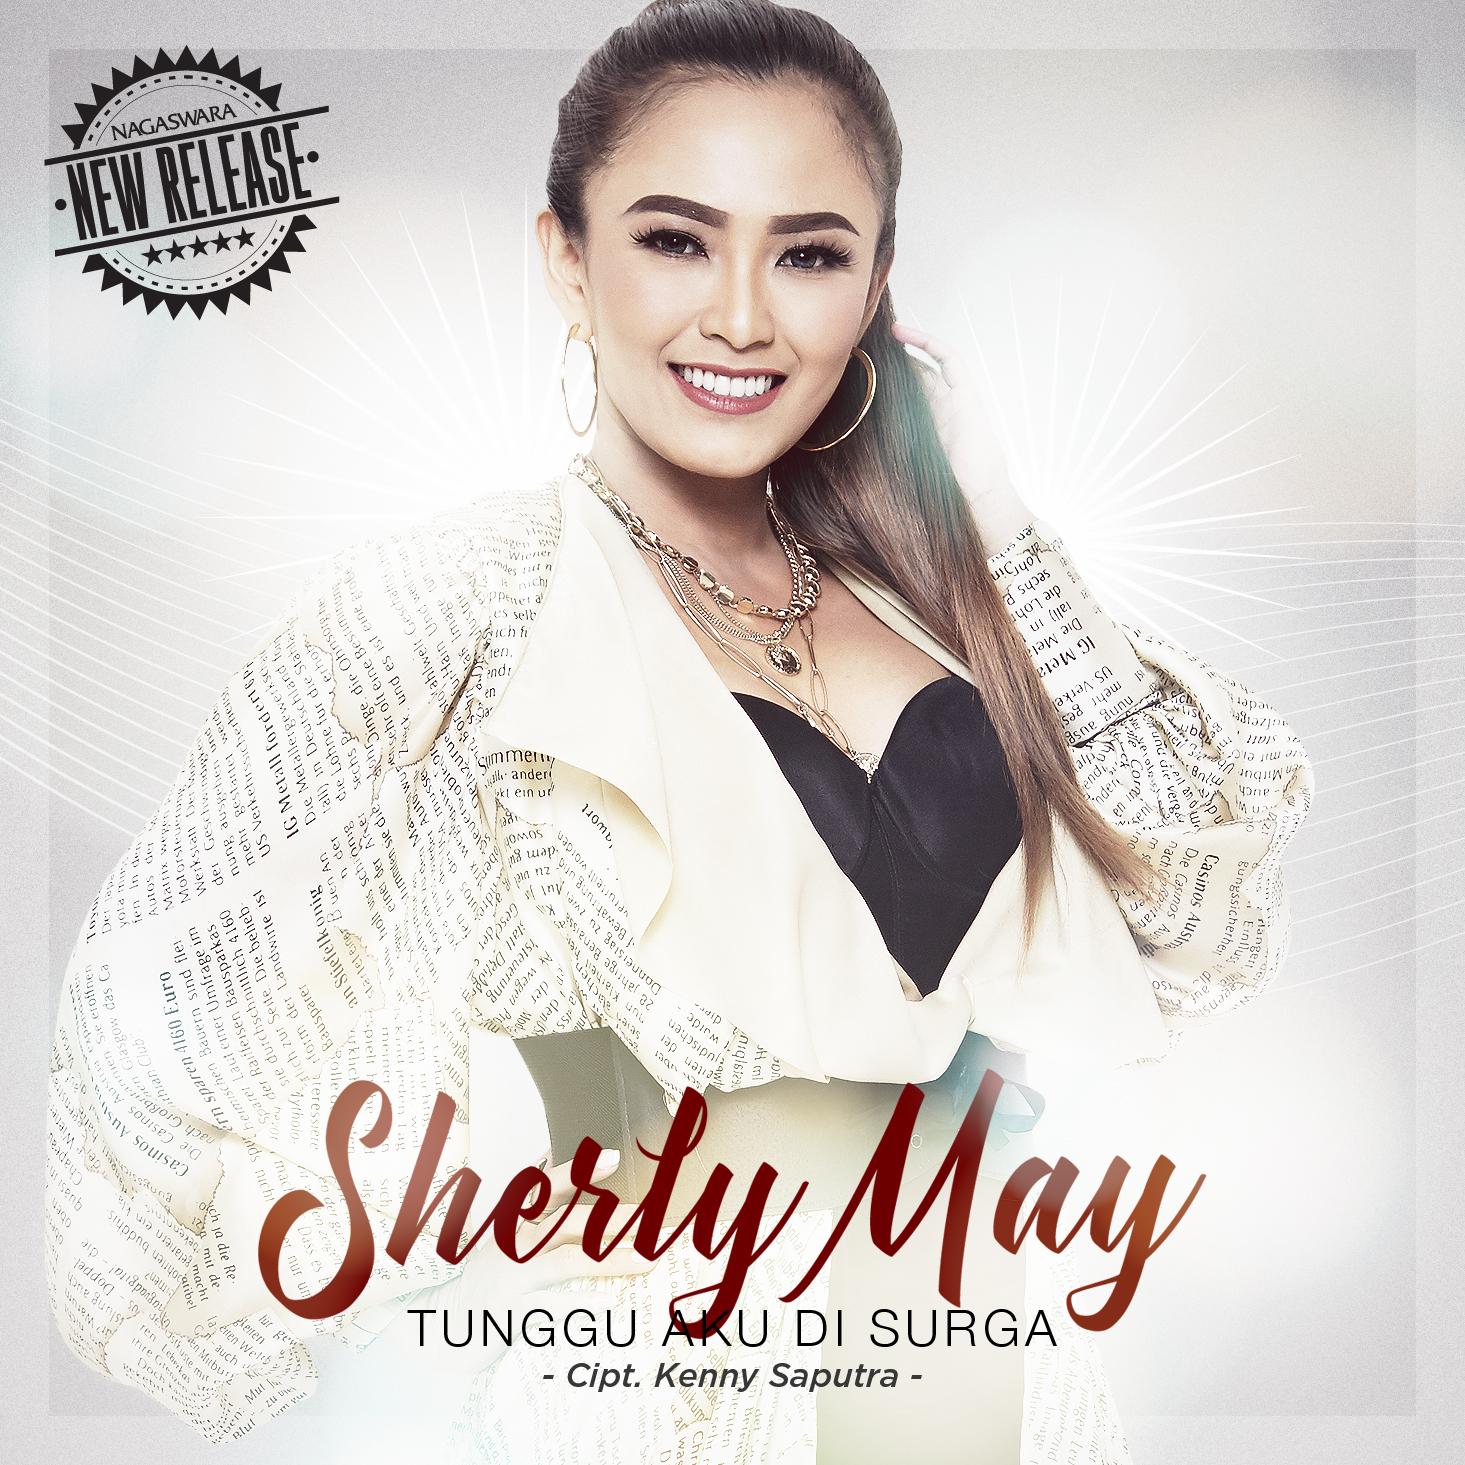 Sherly May Release Single Terbaru “Tunggu Aku Di Surga”